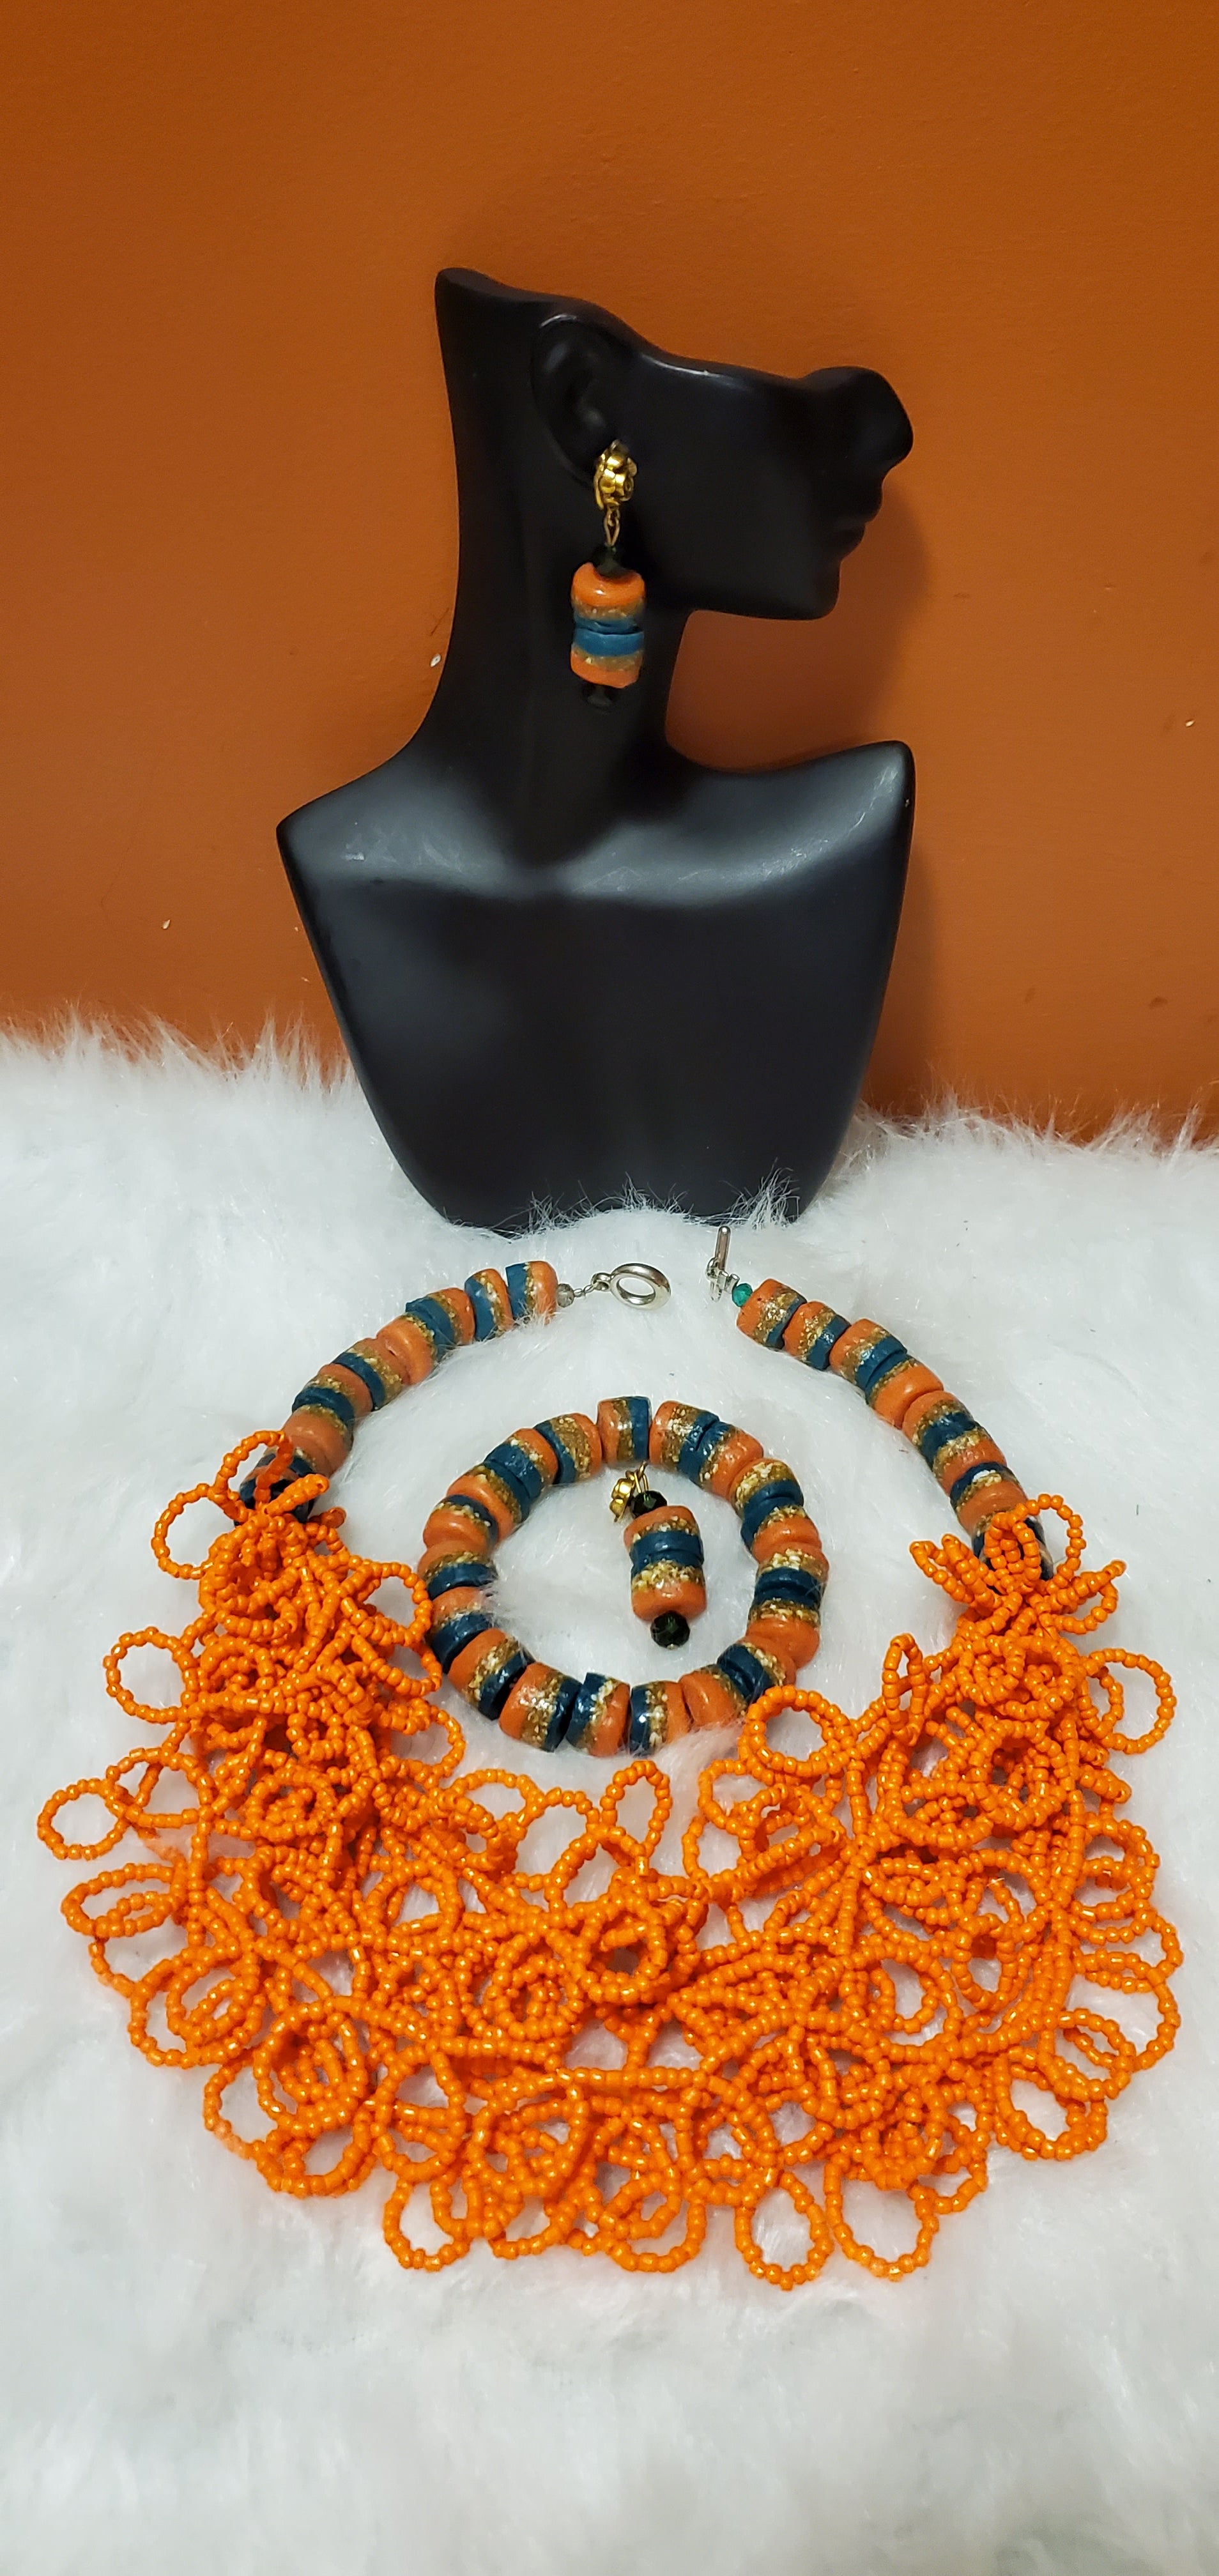 Two Tone Green And Orange Beads Set